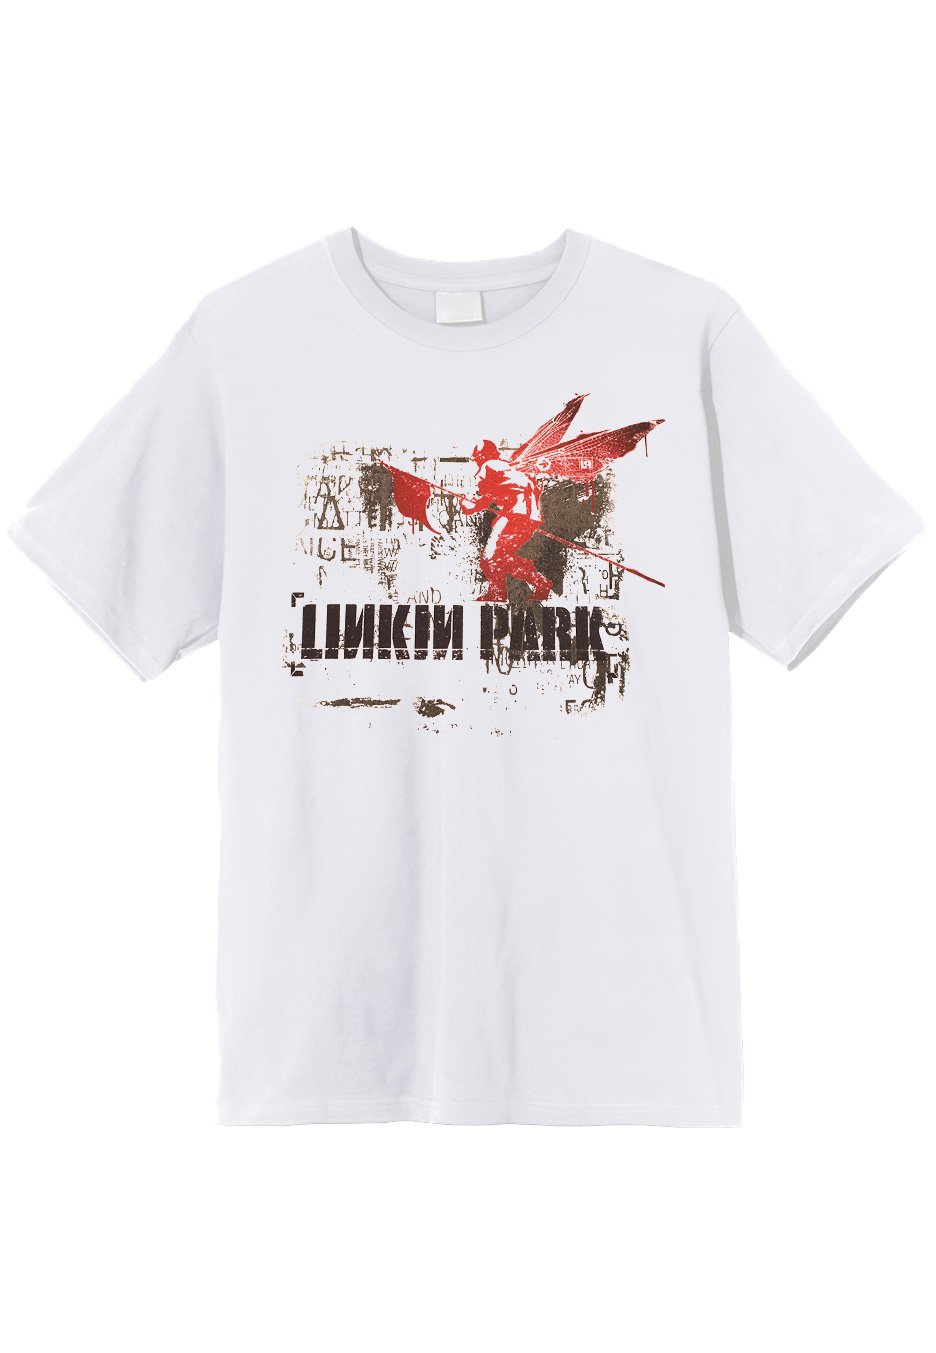 Linkin Park - Side Street Soldier White - T-Shirt